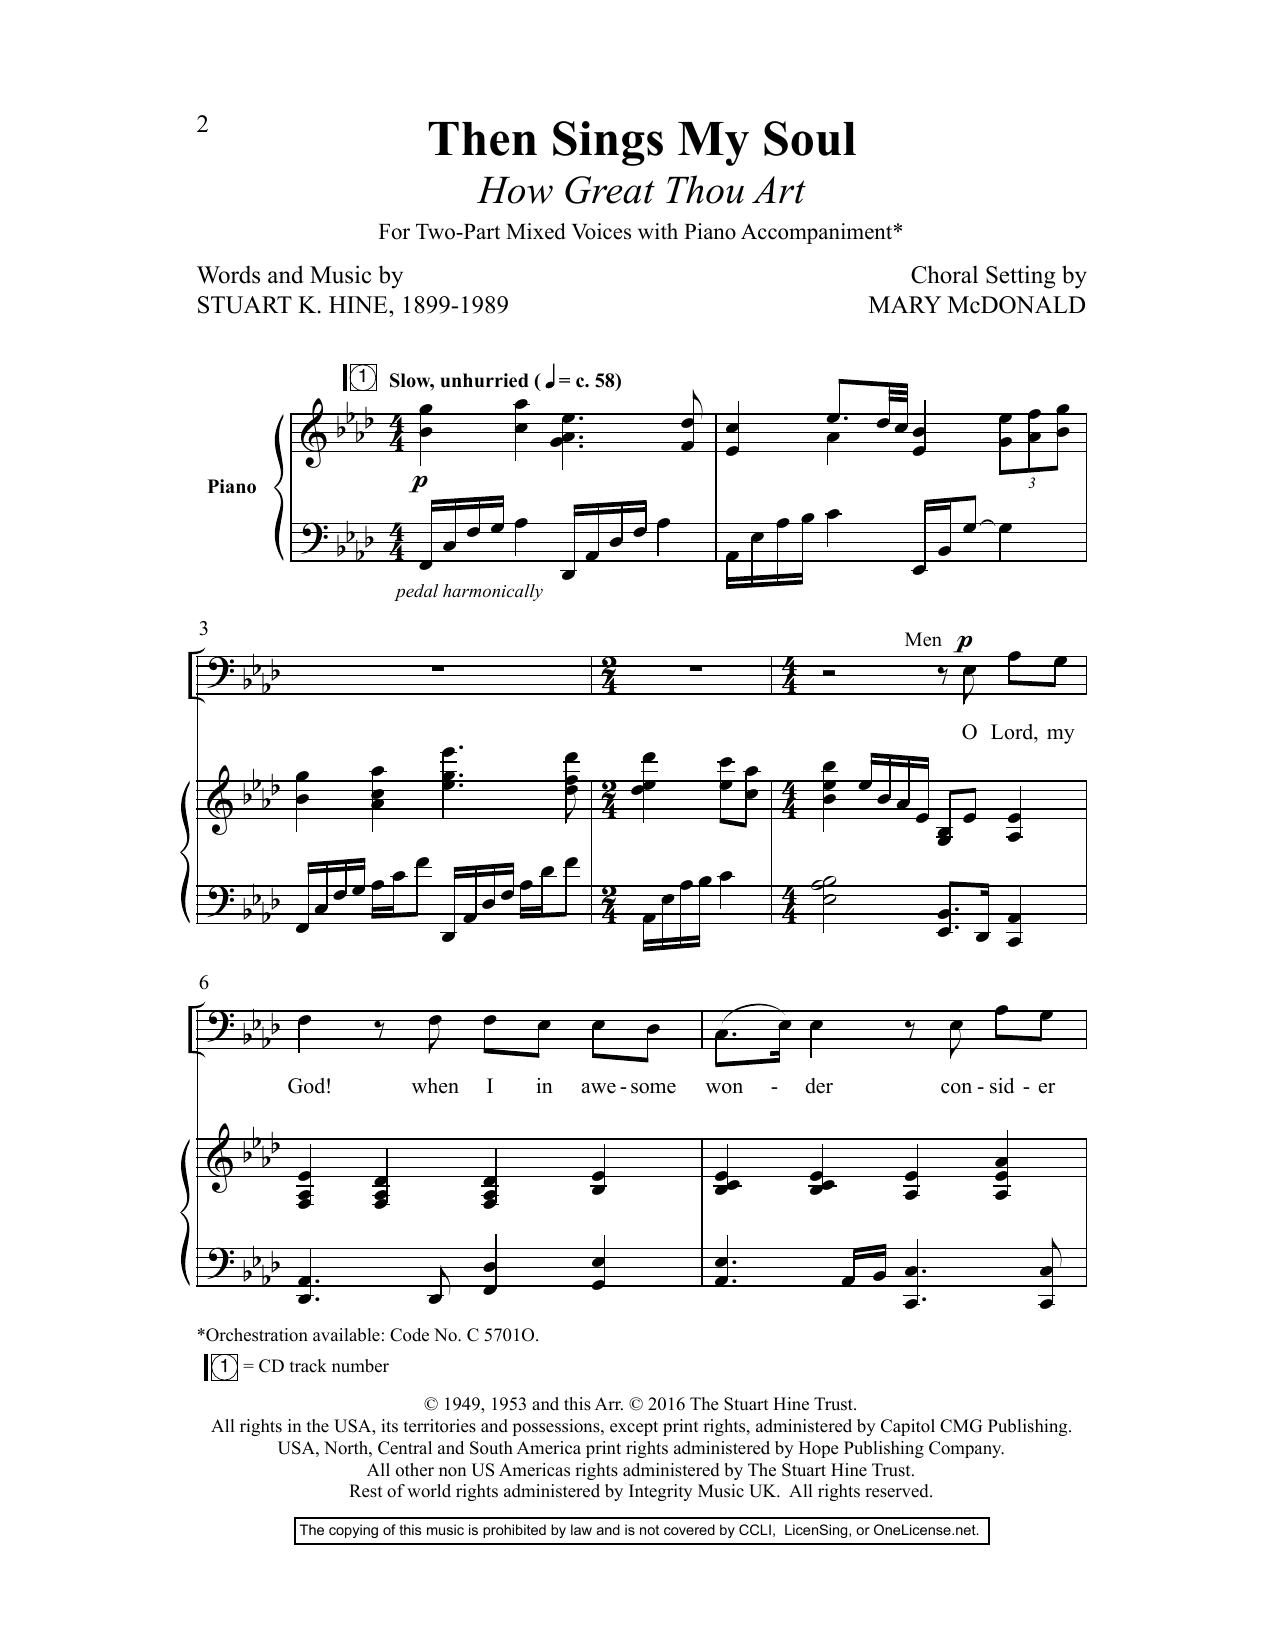 Download Stuart K. Hine Then Sings My Soul (How Great Thou Art) Sheet Music